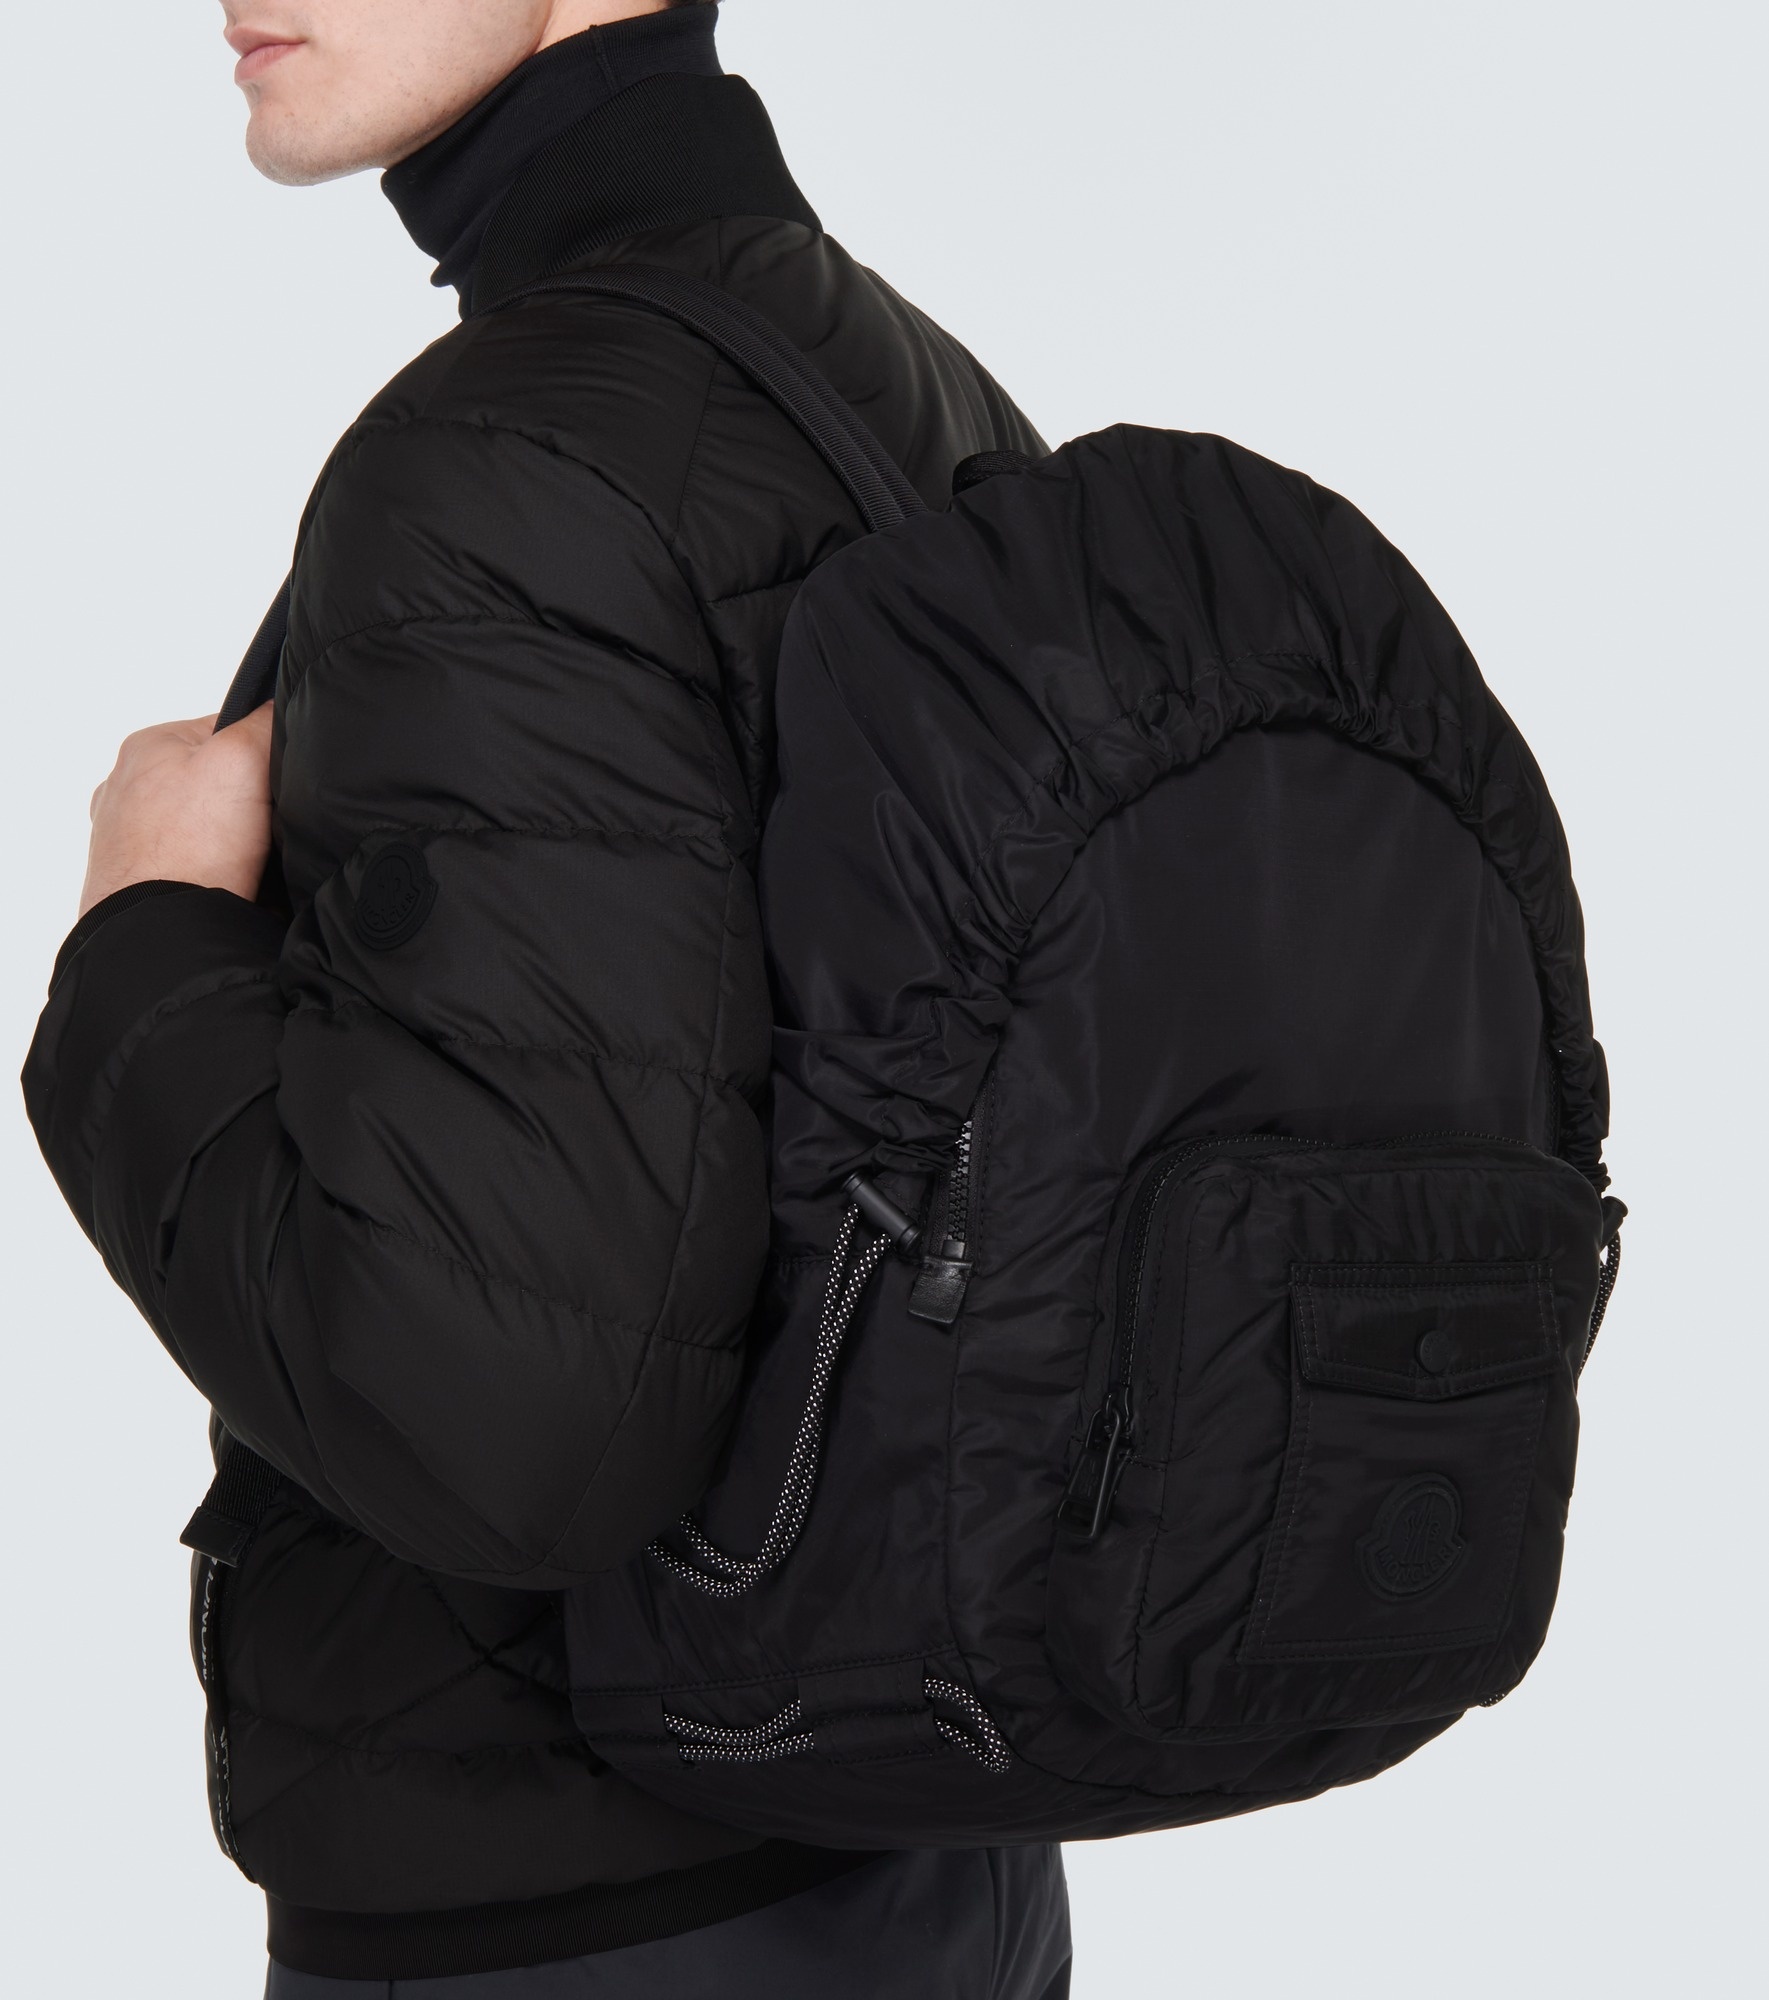 Makaio backpack - 2